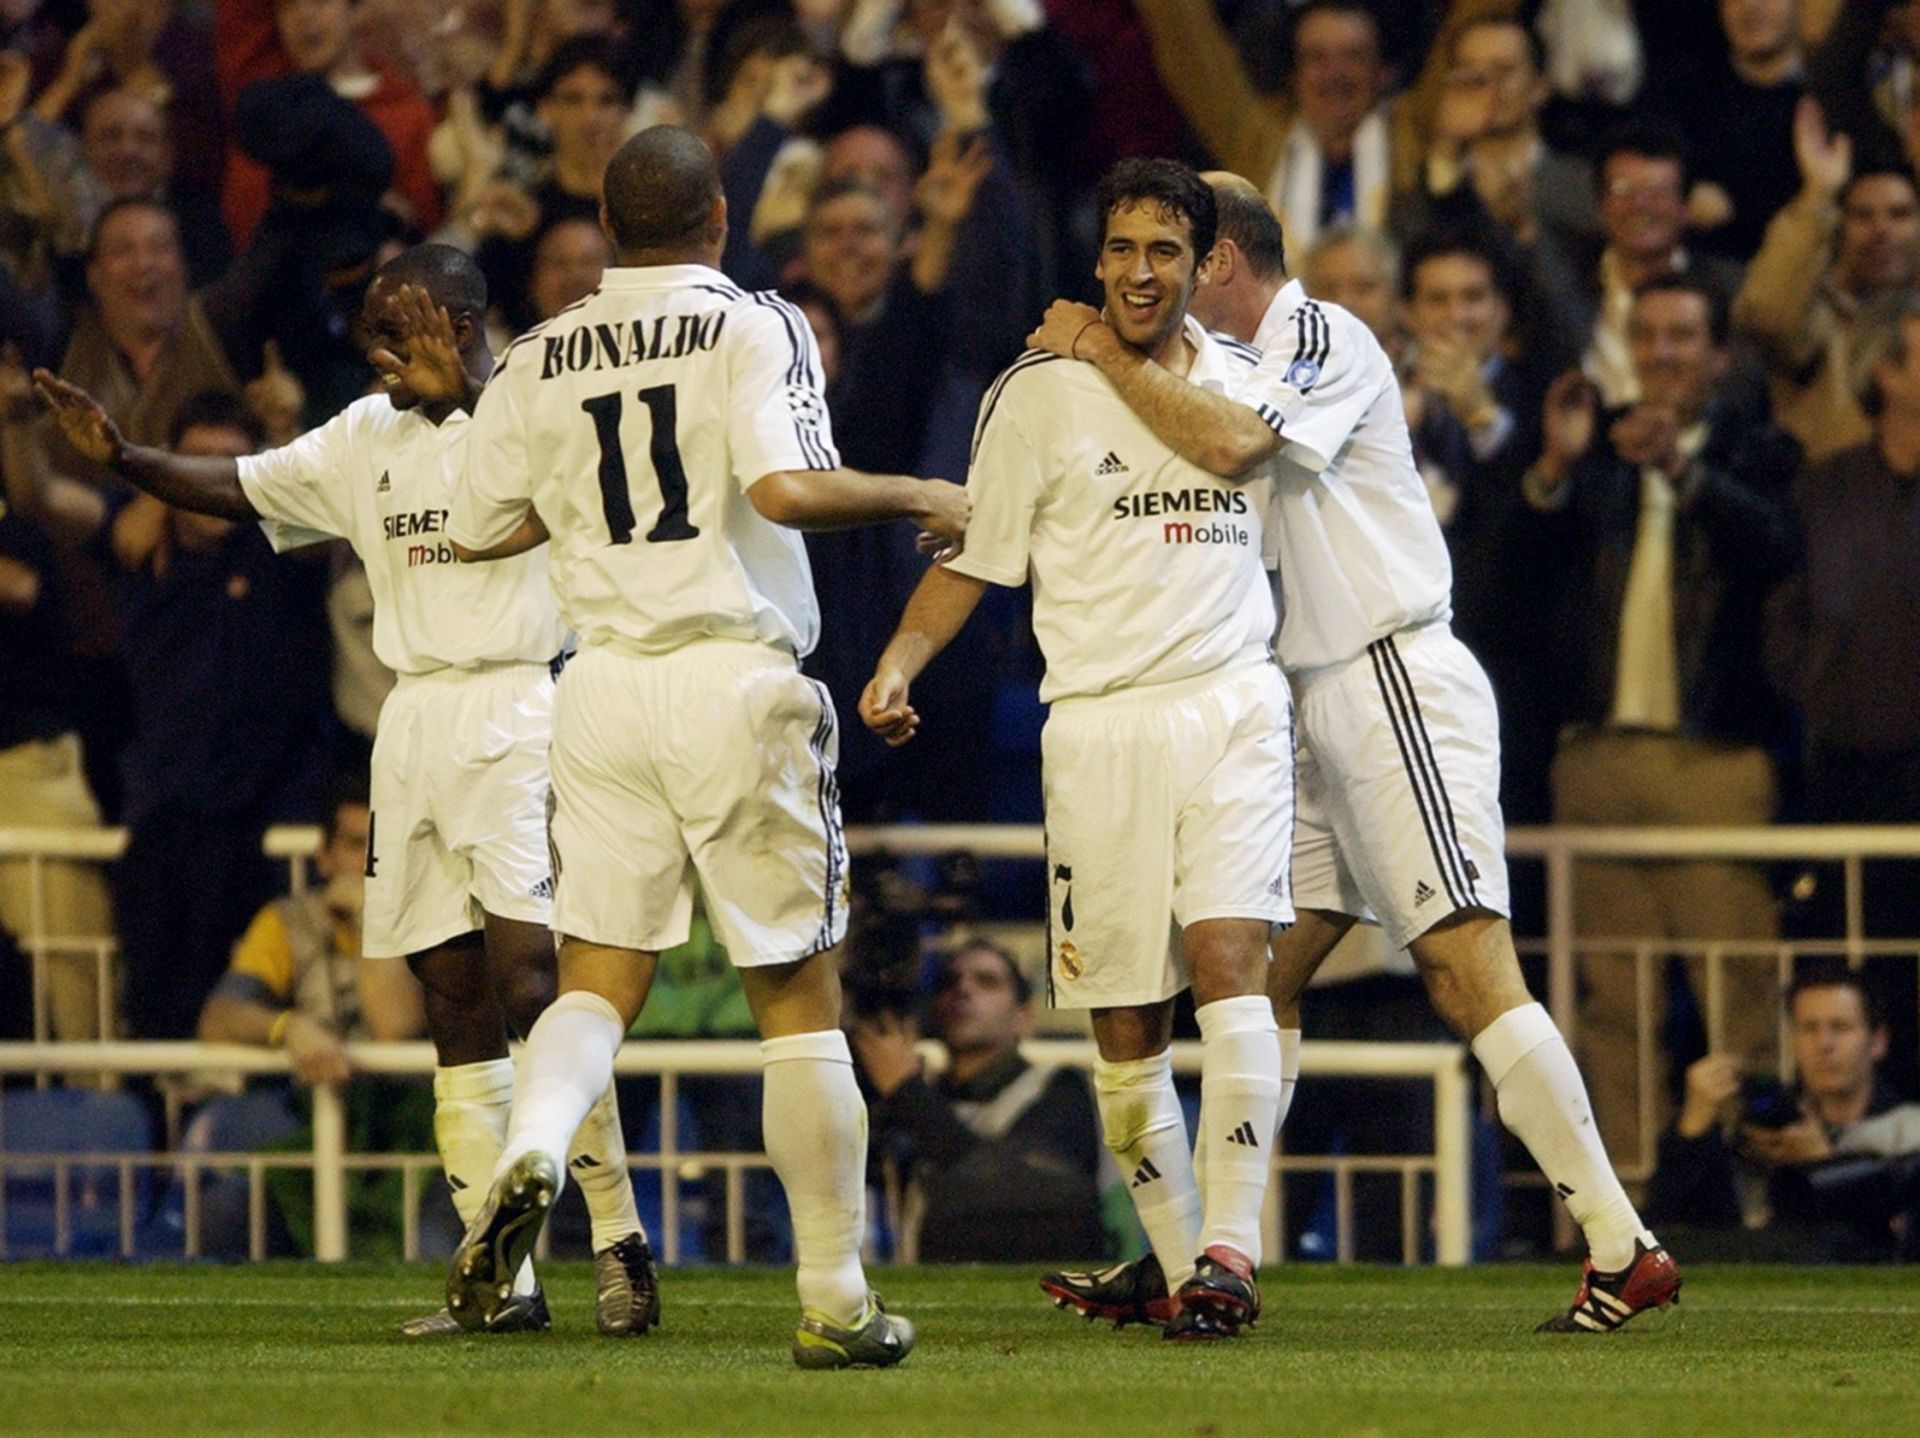 Raul of Real Madrid celebrates scoring the second goal with team-mates Ronaldo and Zinedine Zidane